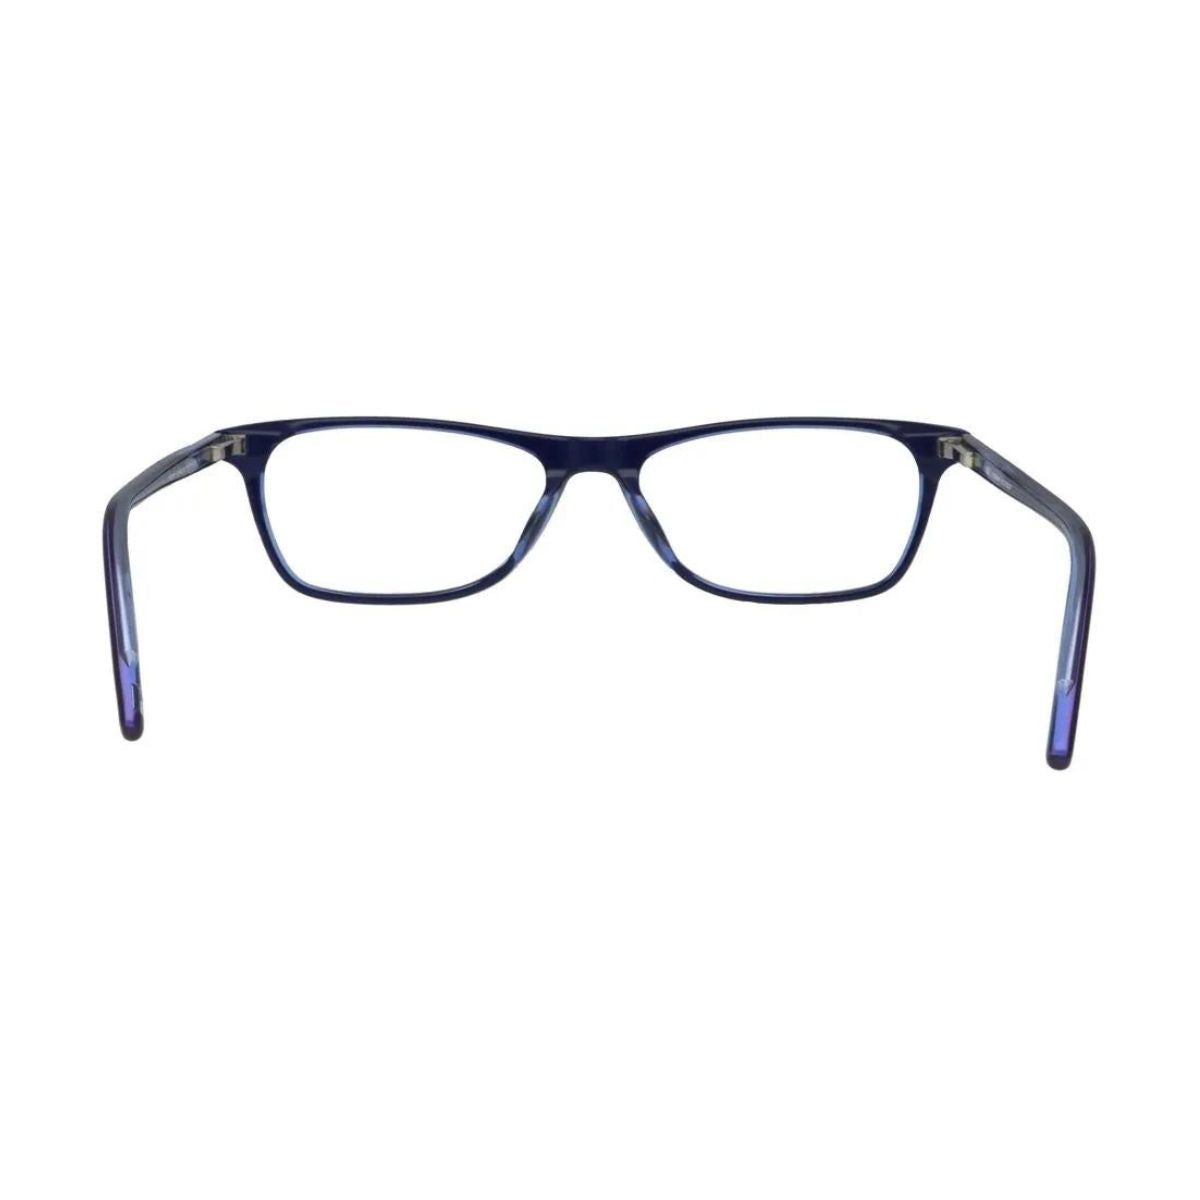 "Tommy Hilfiger 3204 C4 eyesight glasses frame for men's and women's online at optorium"